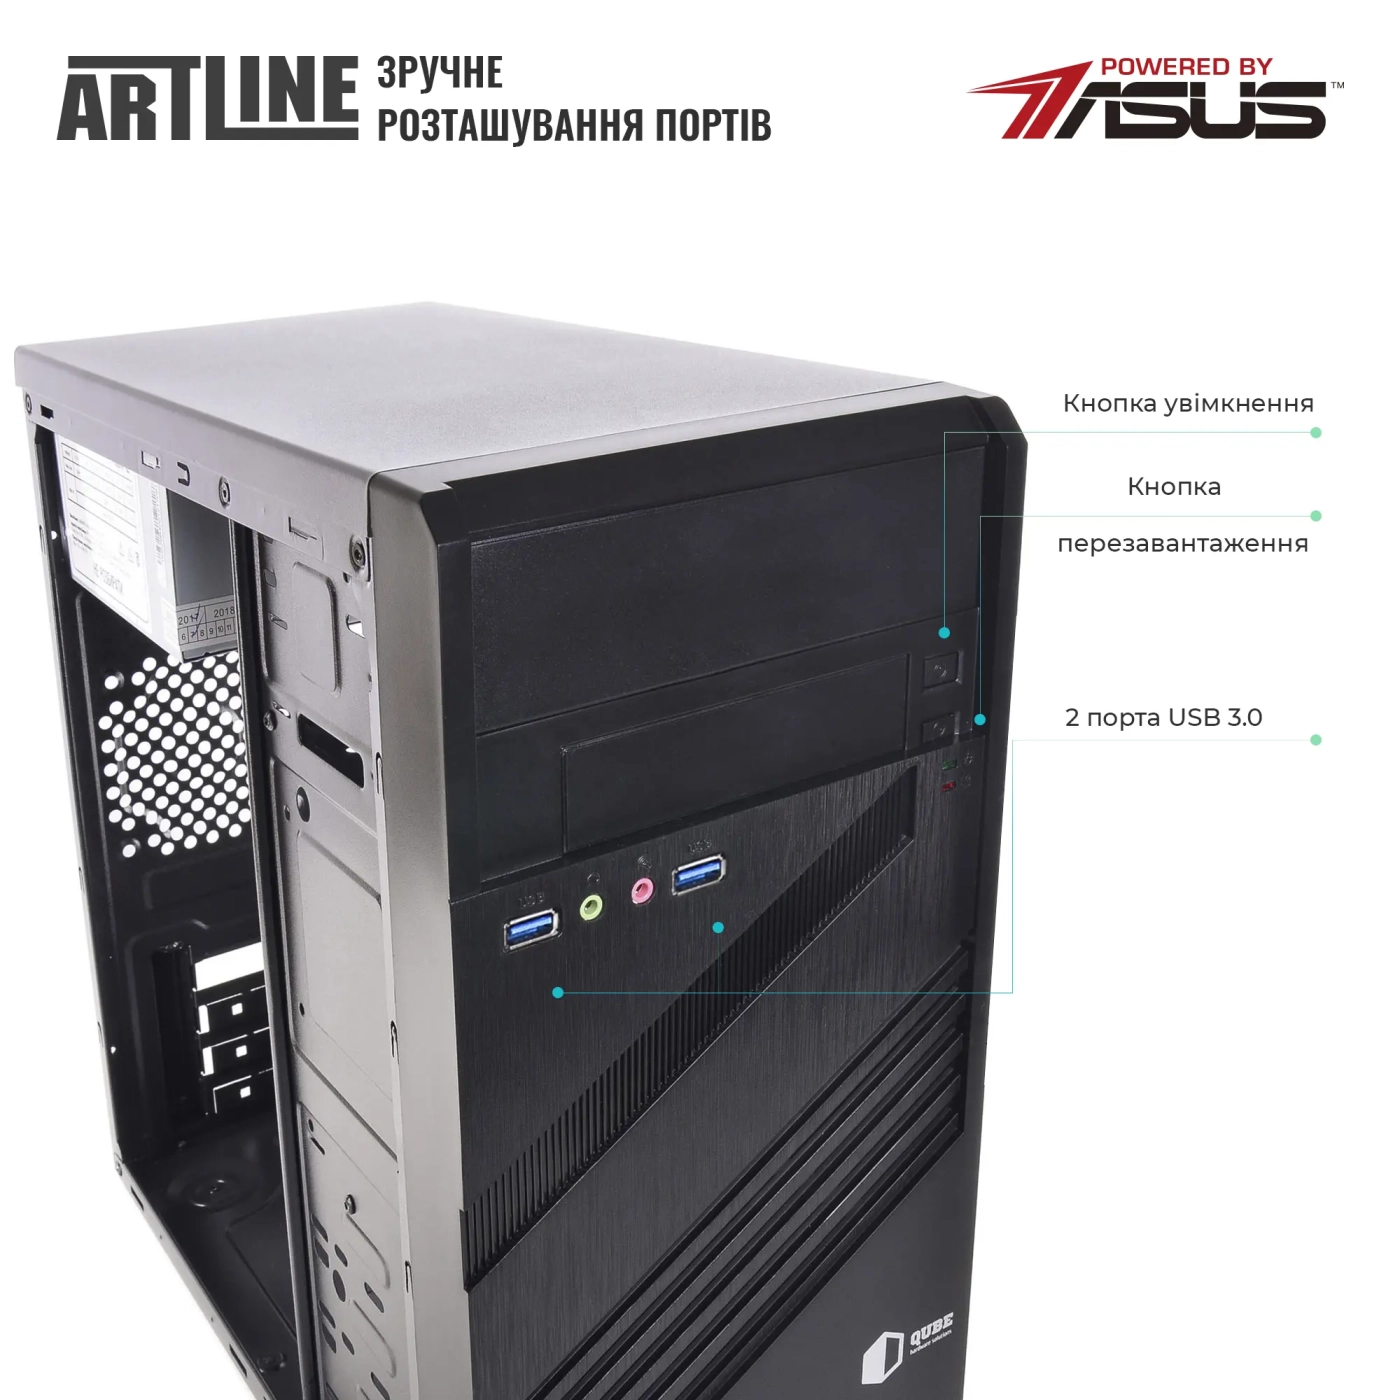 Купить Компьютер ARTLINE Business B57 (B57v86) - фото 2